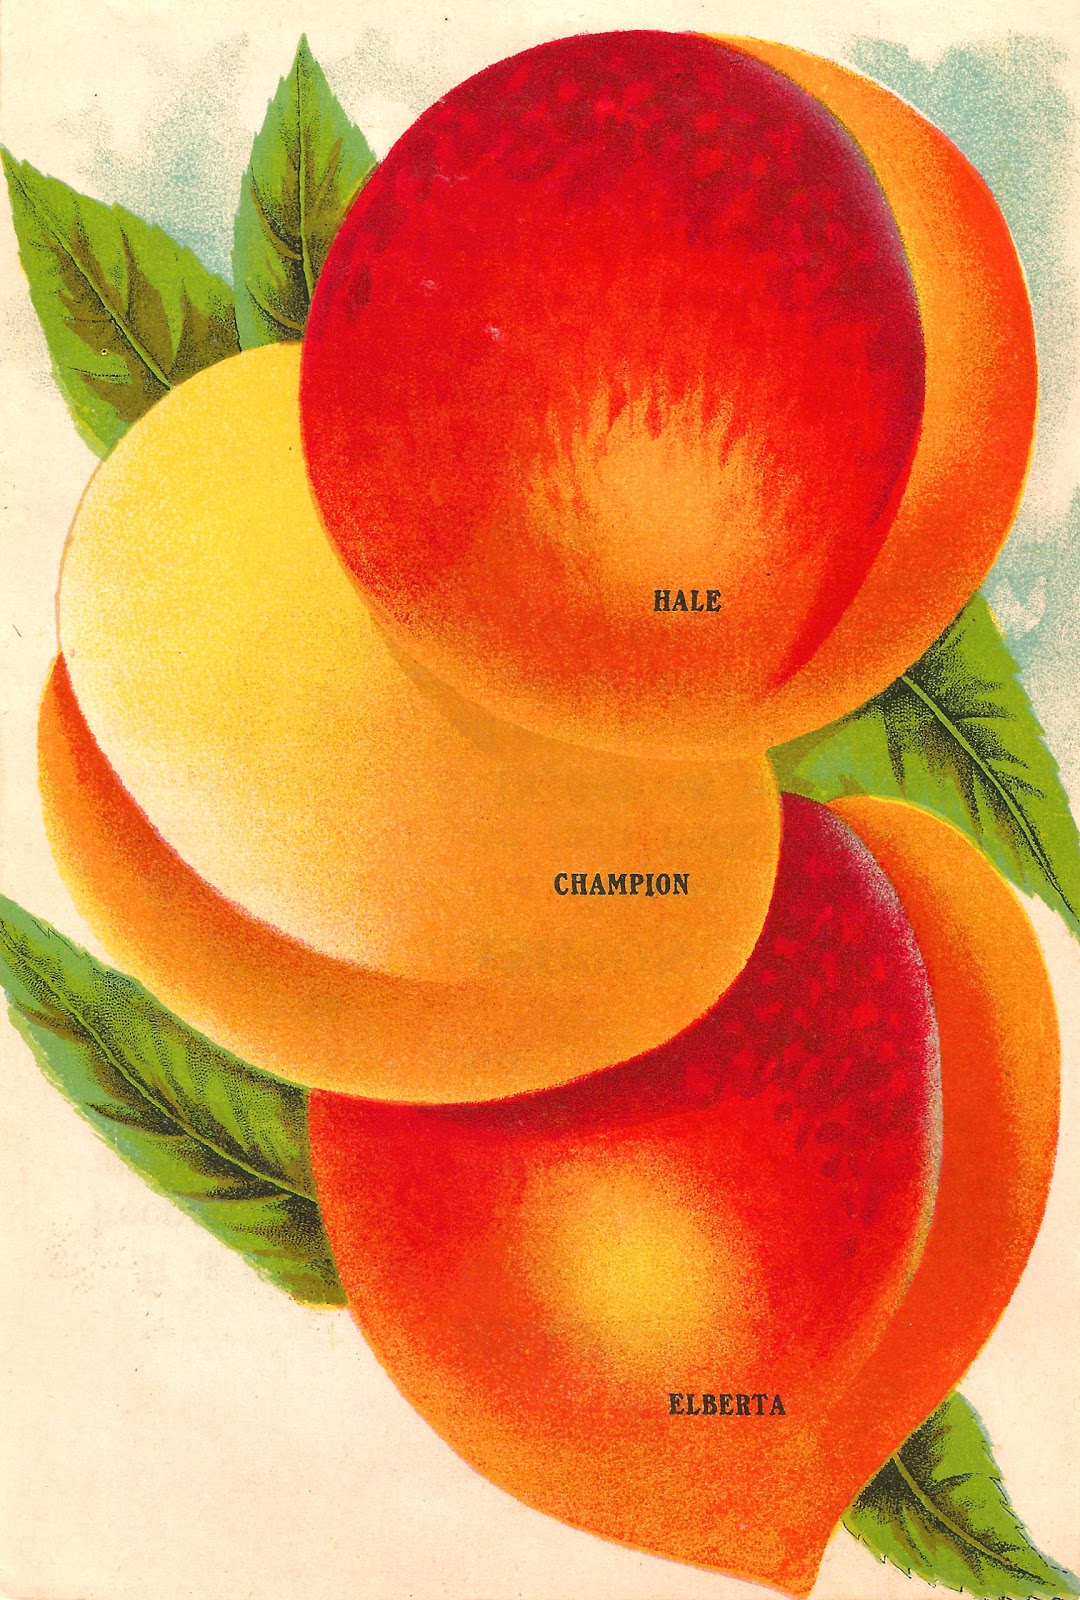 Vintage Fruit Peach Clip Art  3 Varieties Of Peaches From Vintage Seed